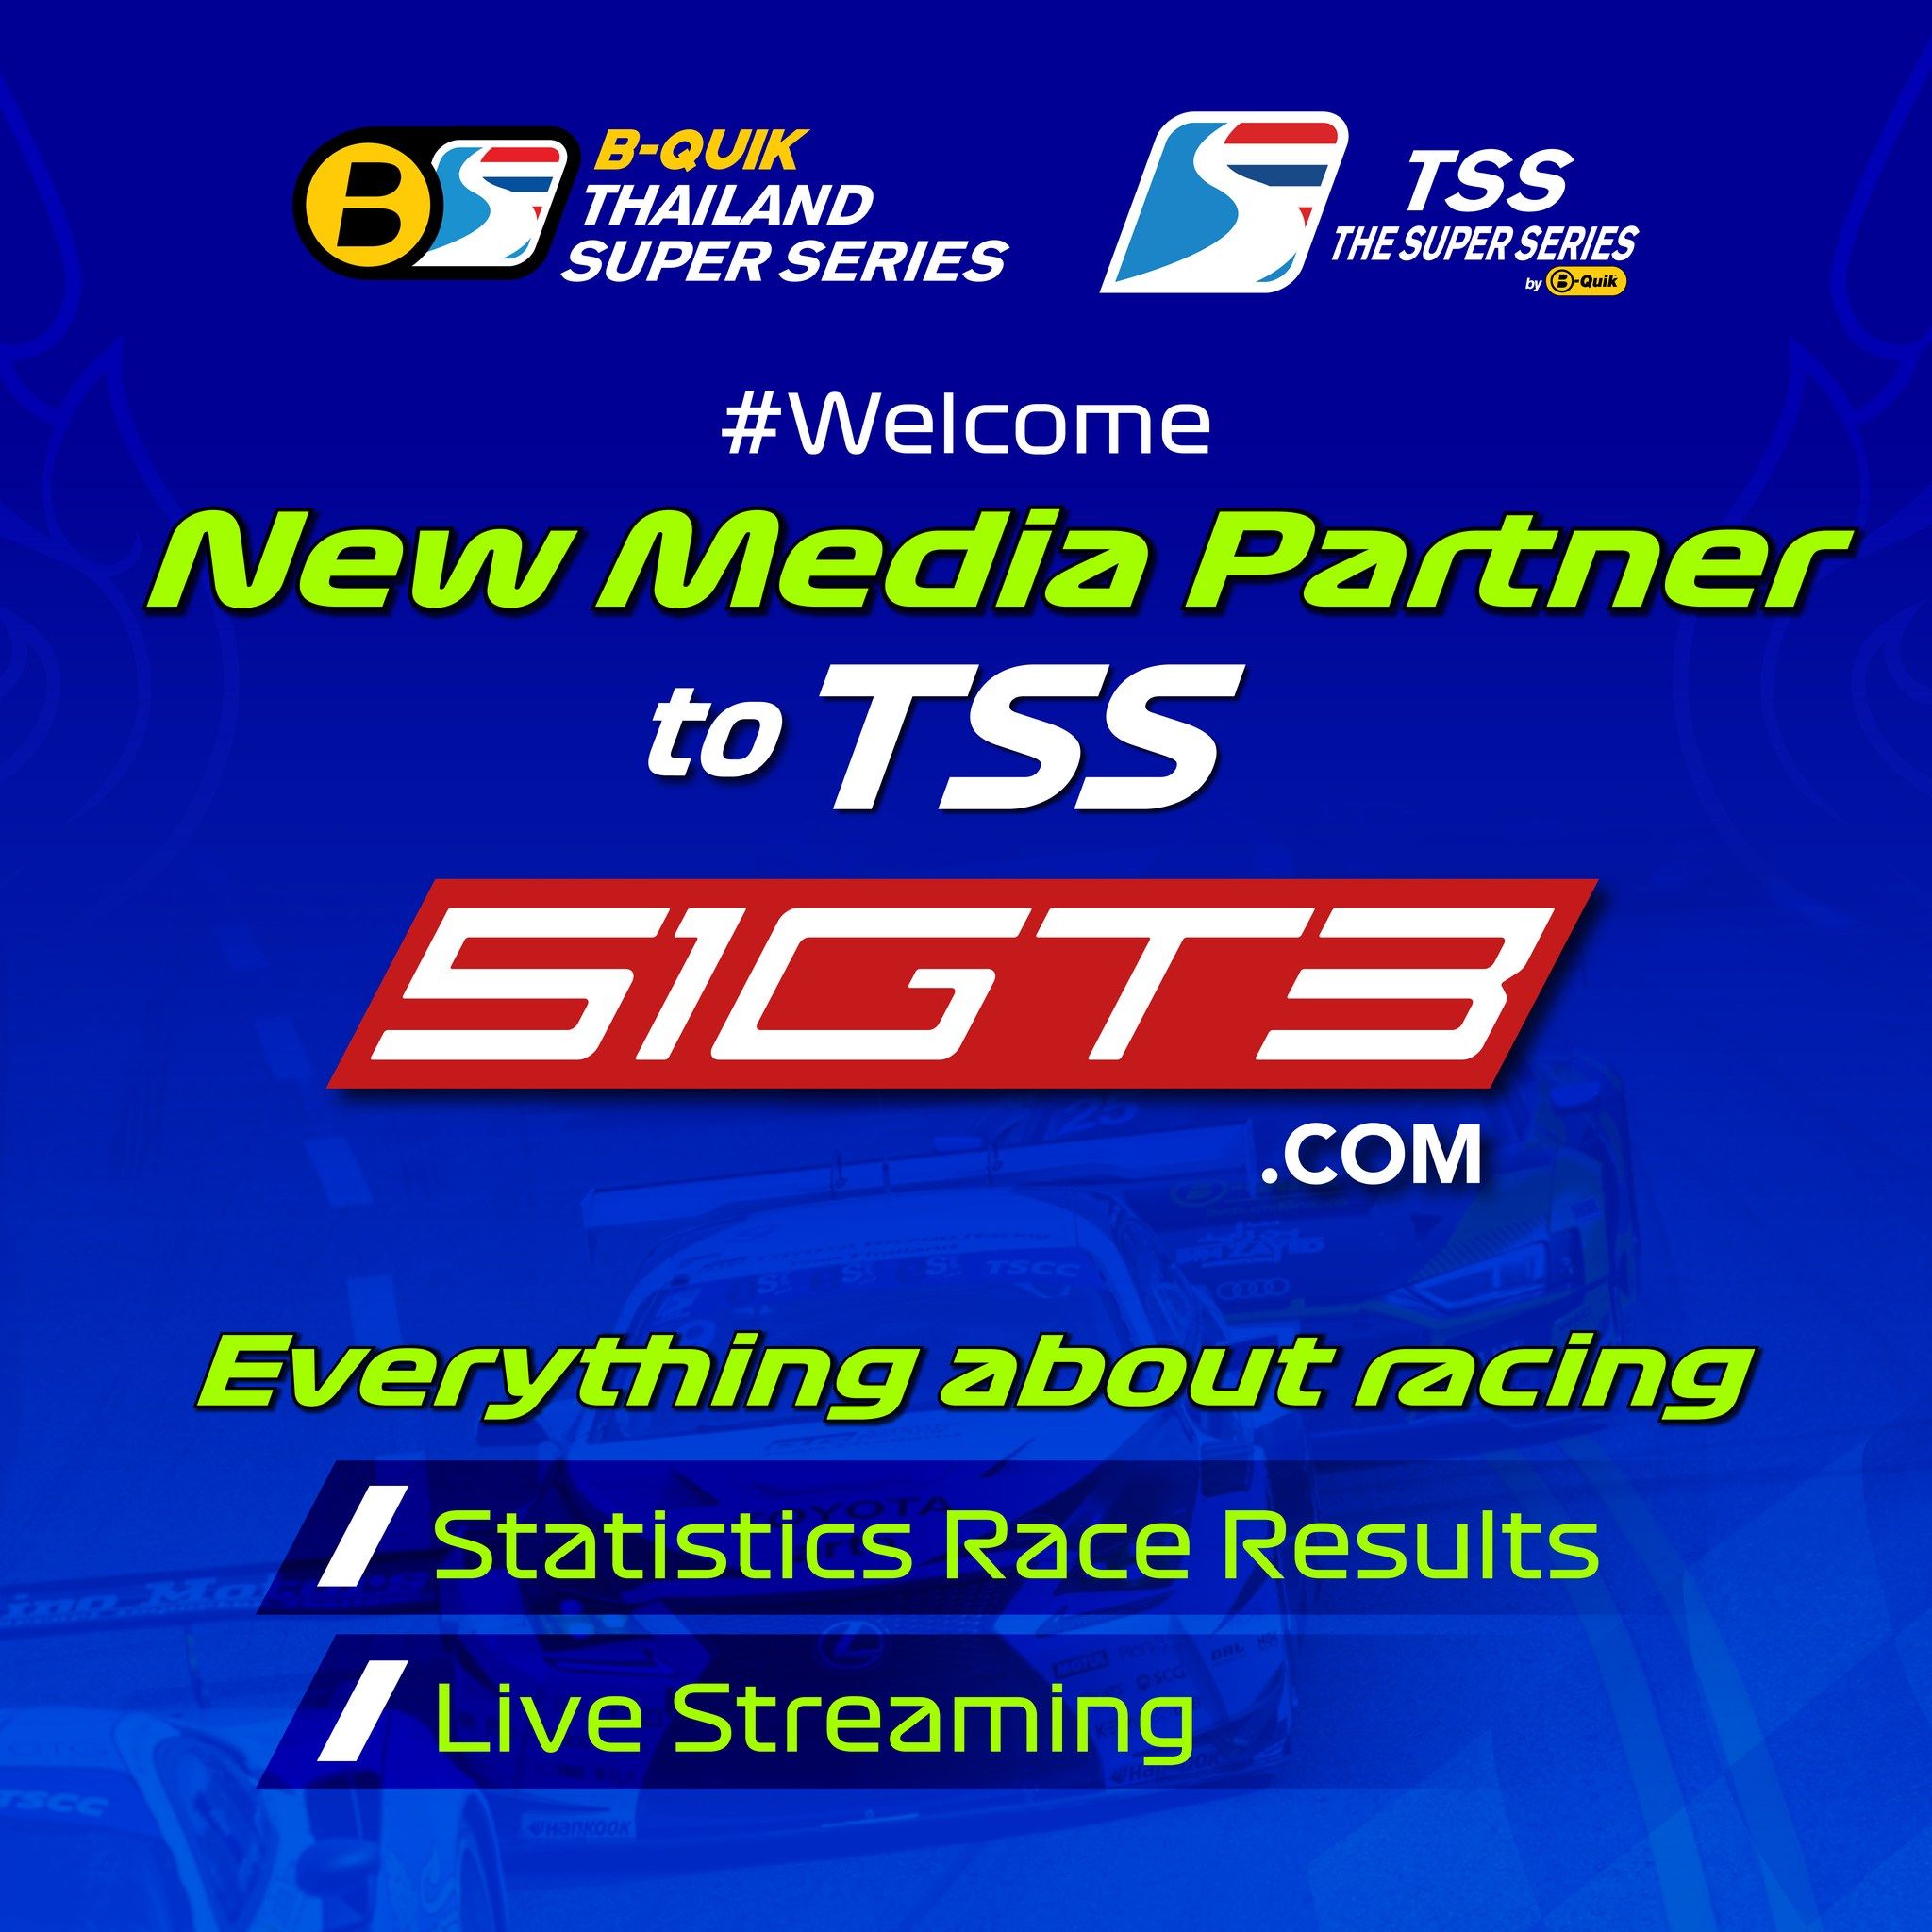 TSS의 새로운 미디어 파트너를 환영합니다 - 51GT3.com